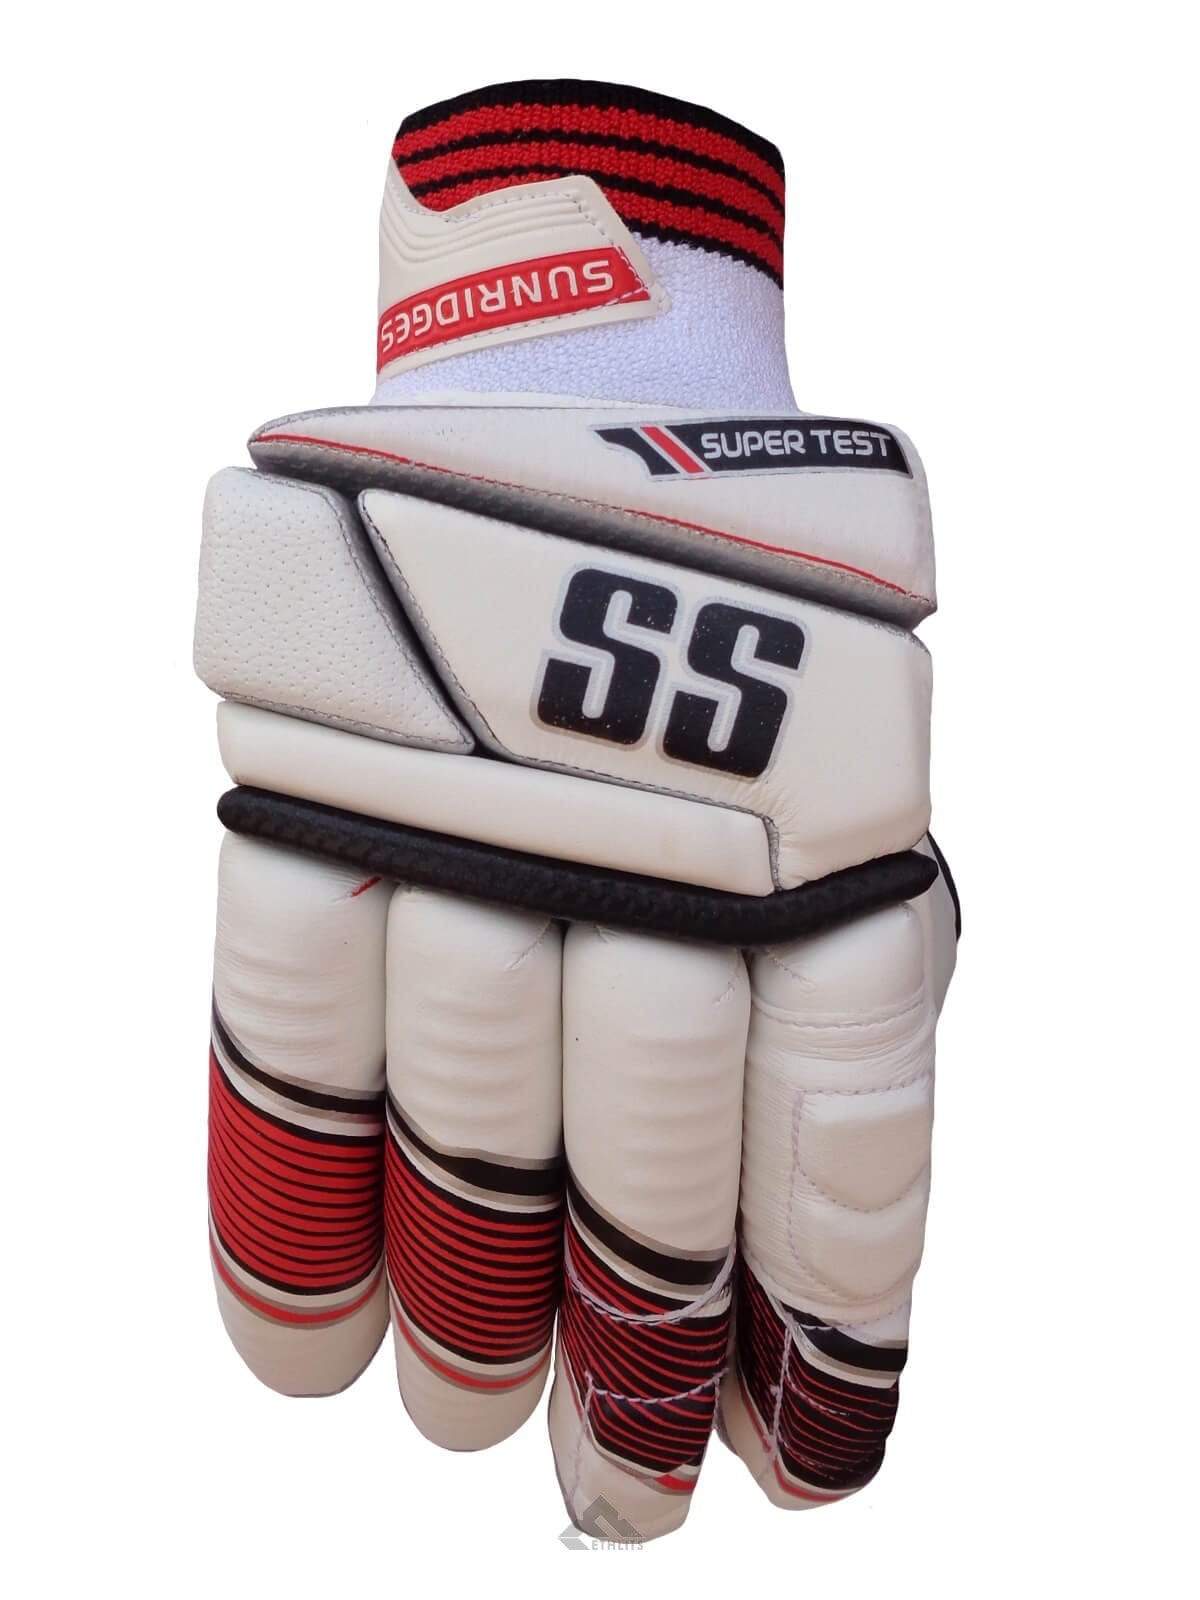 SS Gloves SS Super Test Batting Gloves